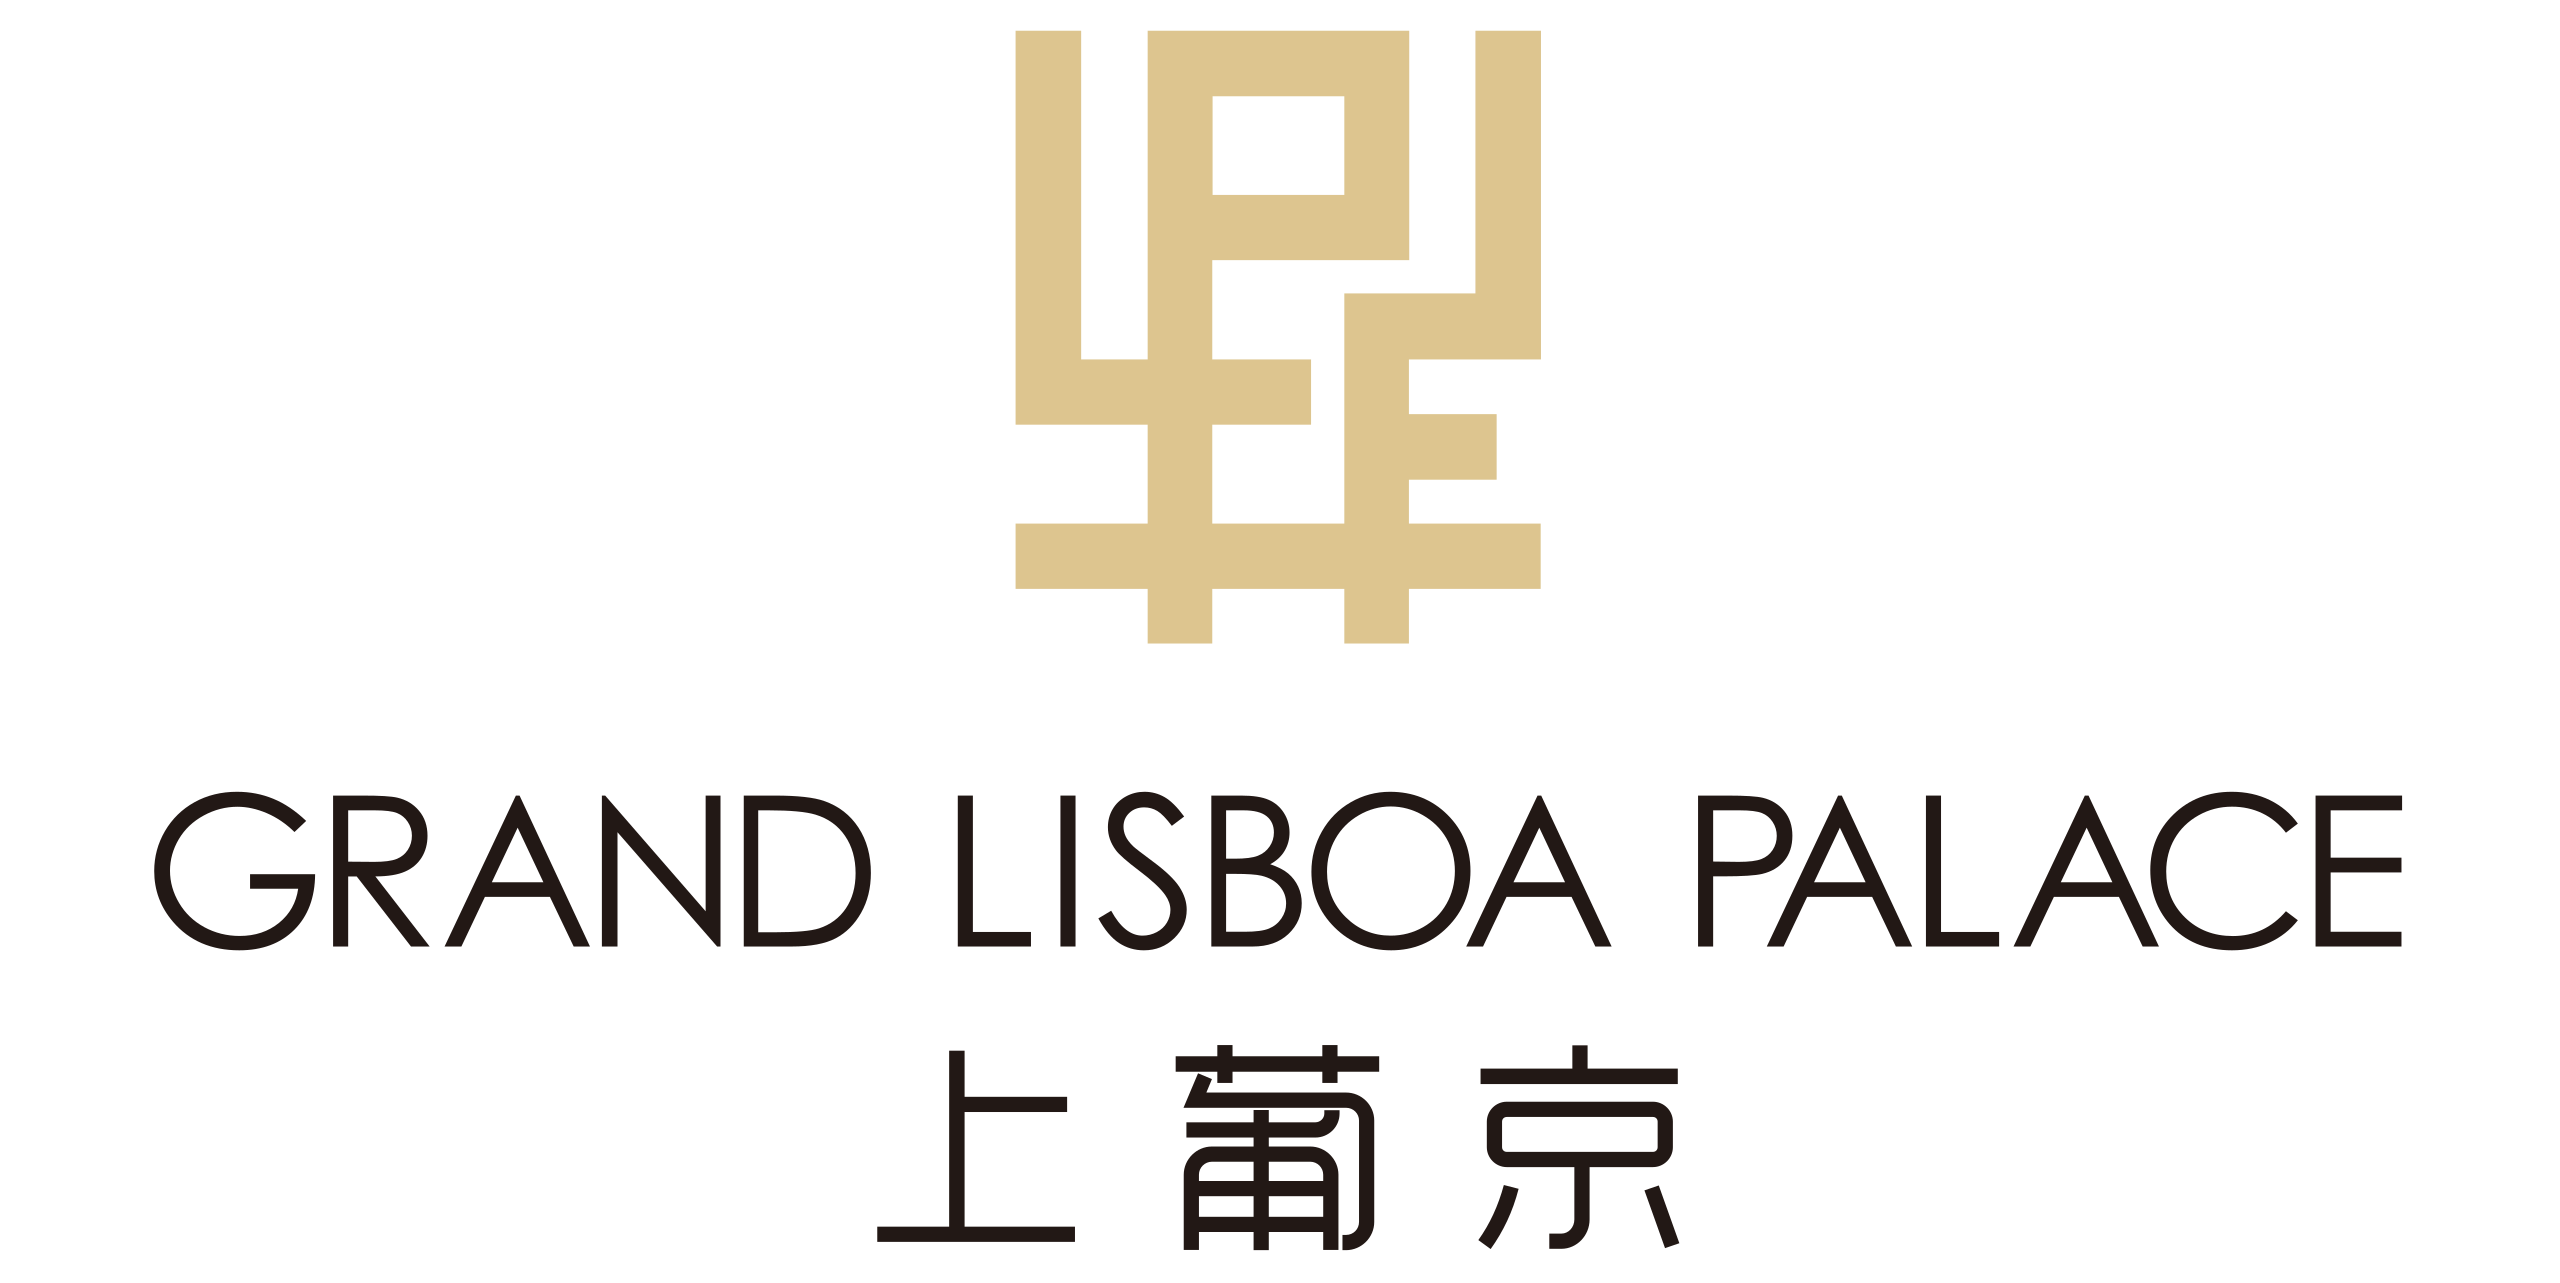 18_Grand_Lisboa_Palace_logo